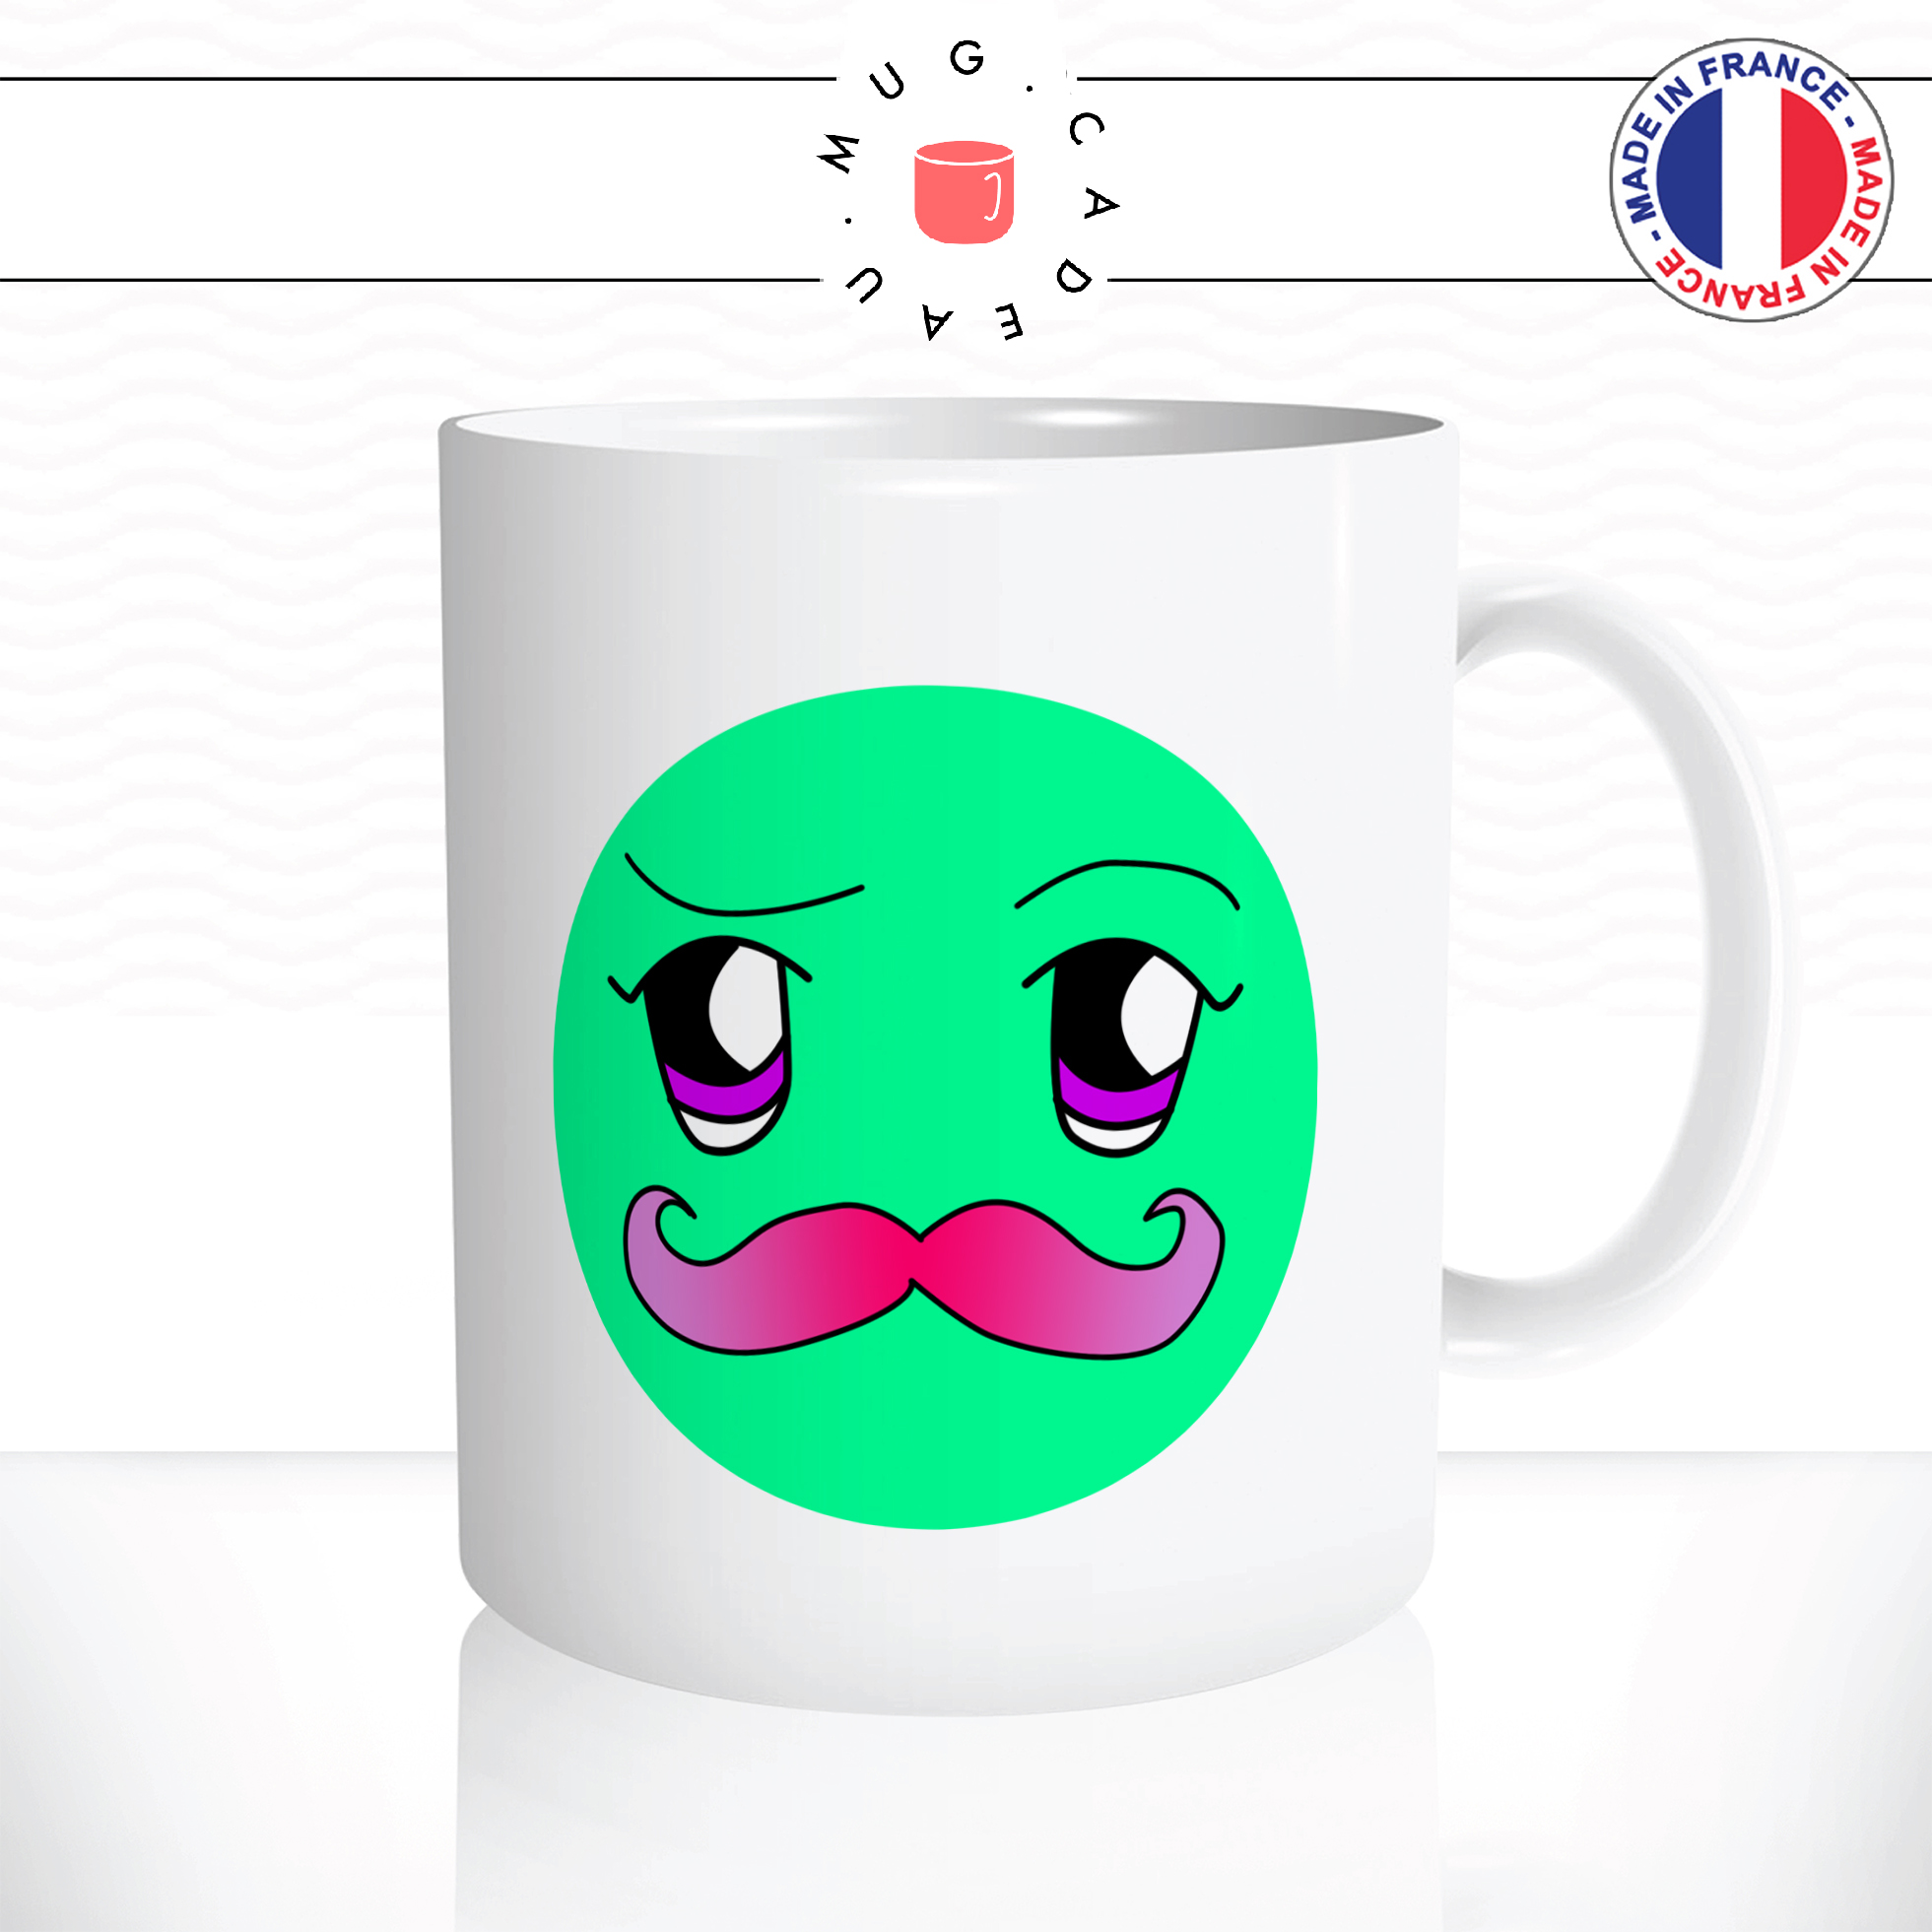 mug-tasse-ref5-visage-rond-vert-moustache-rose-cafe-the-mugs-tasses-personnalise-anse-droite